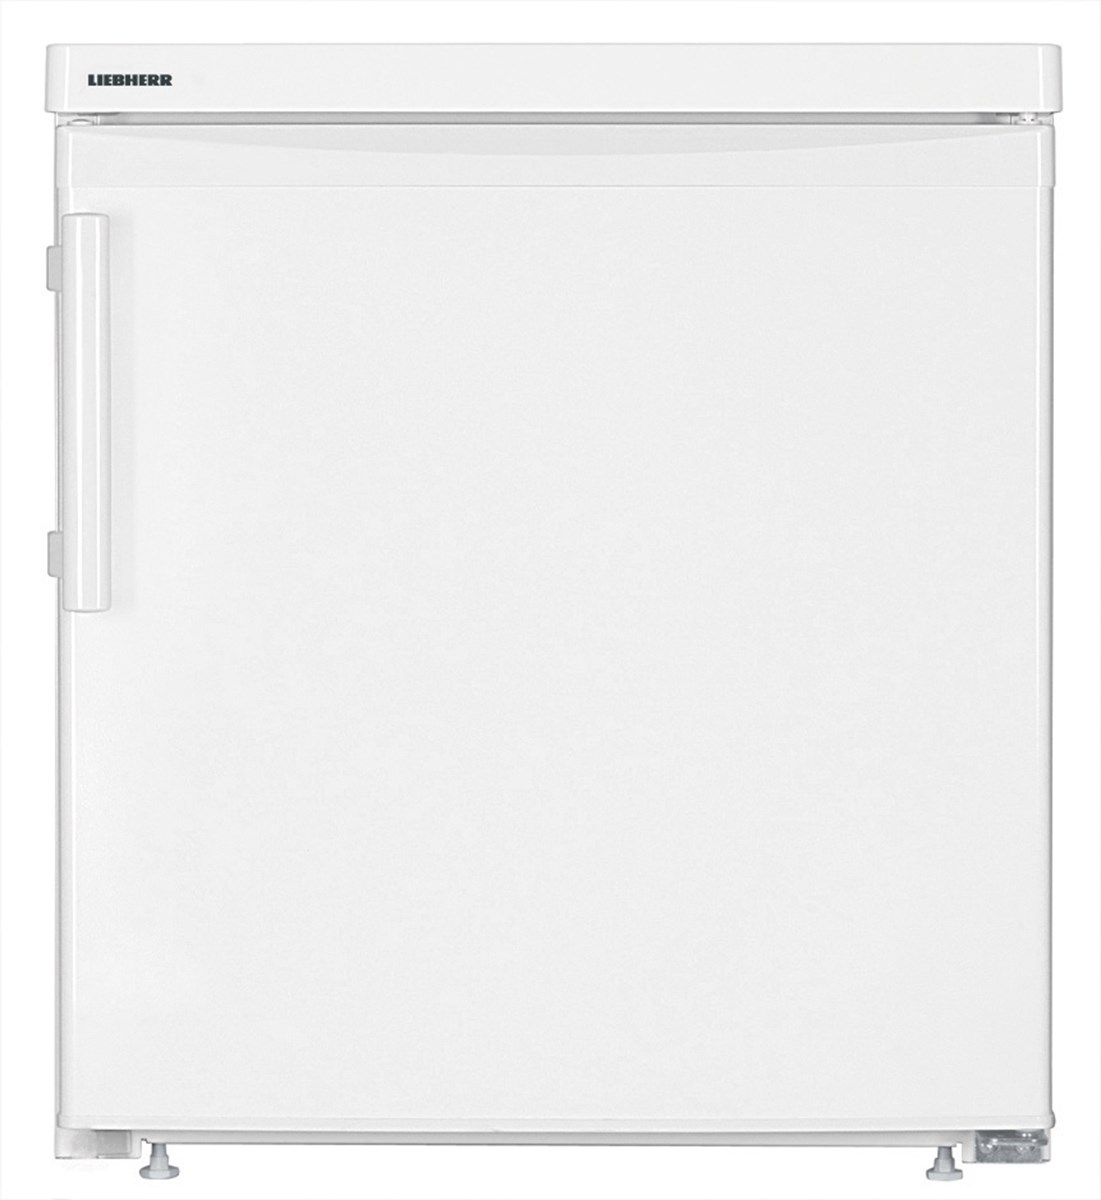 холодильник liebherr tx-1021, купить в Красноярске холодильник liebherr tx-1021,  купить в Красноярске дешево холодильник liebherr tx-1021, купить в Красноярске минимальной цене холодильник liebherr tx-1021